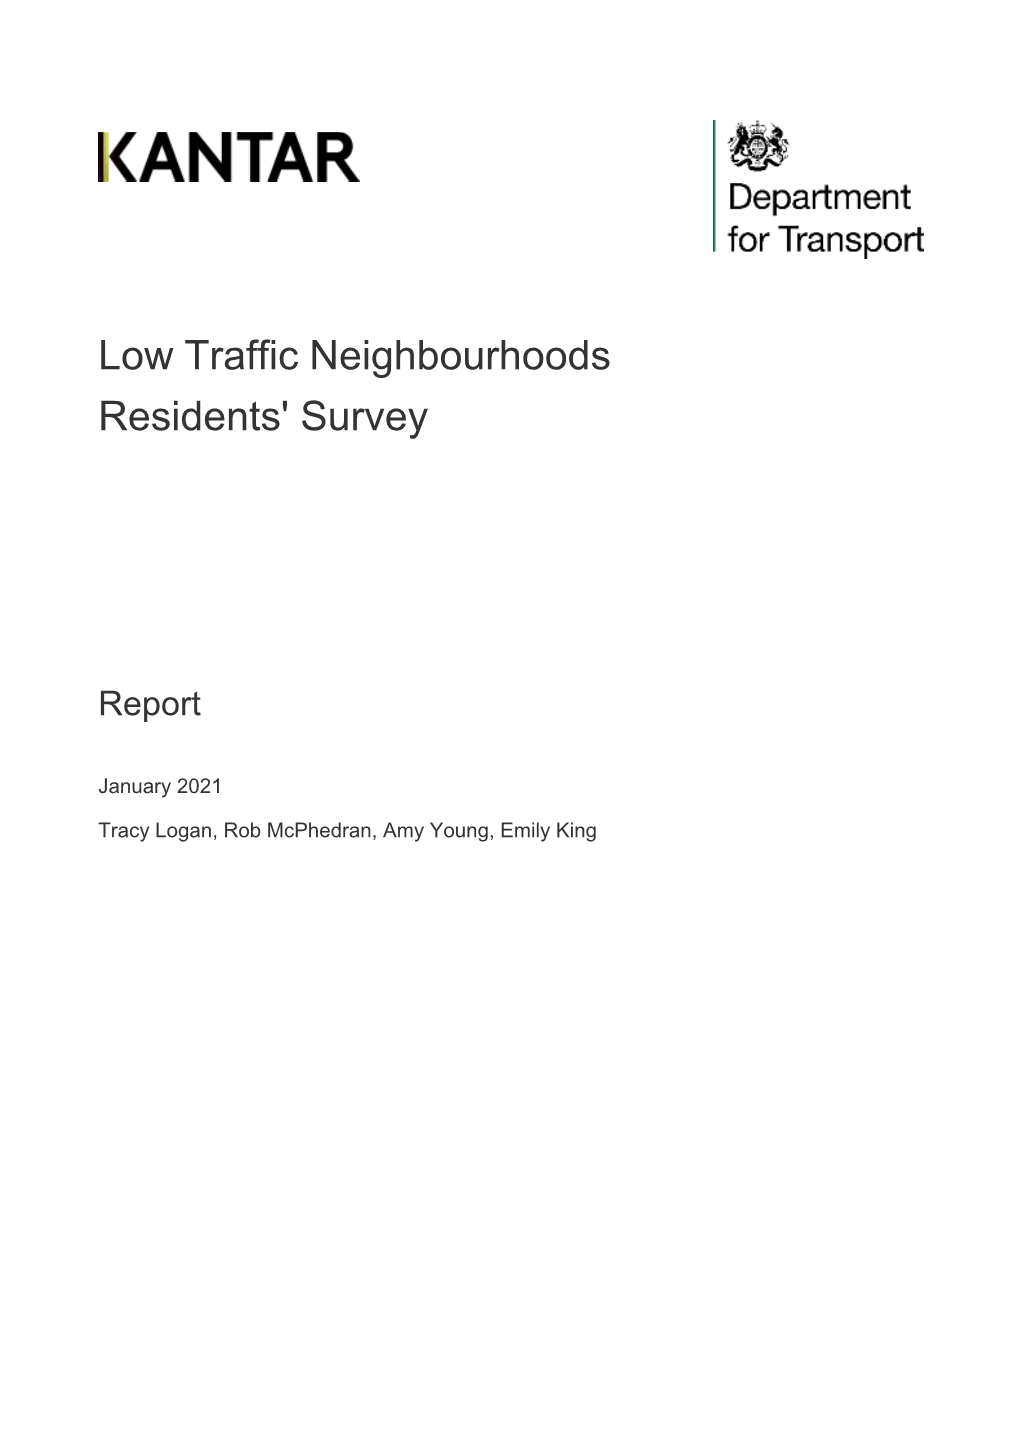 Low Traffic Neighbourhoods Residents Survey